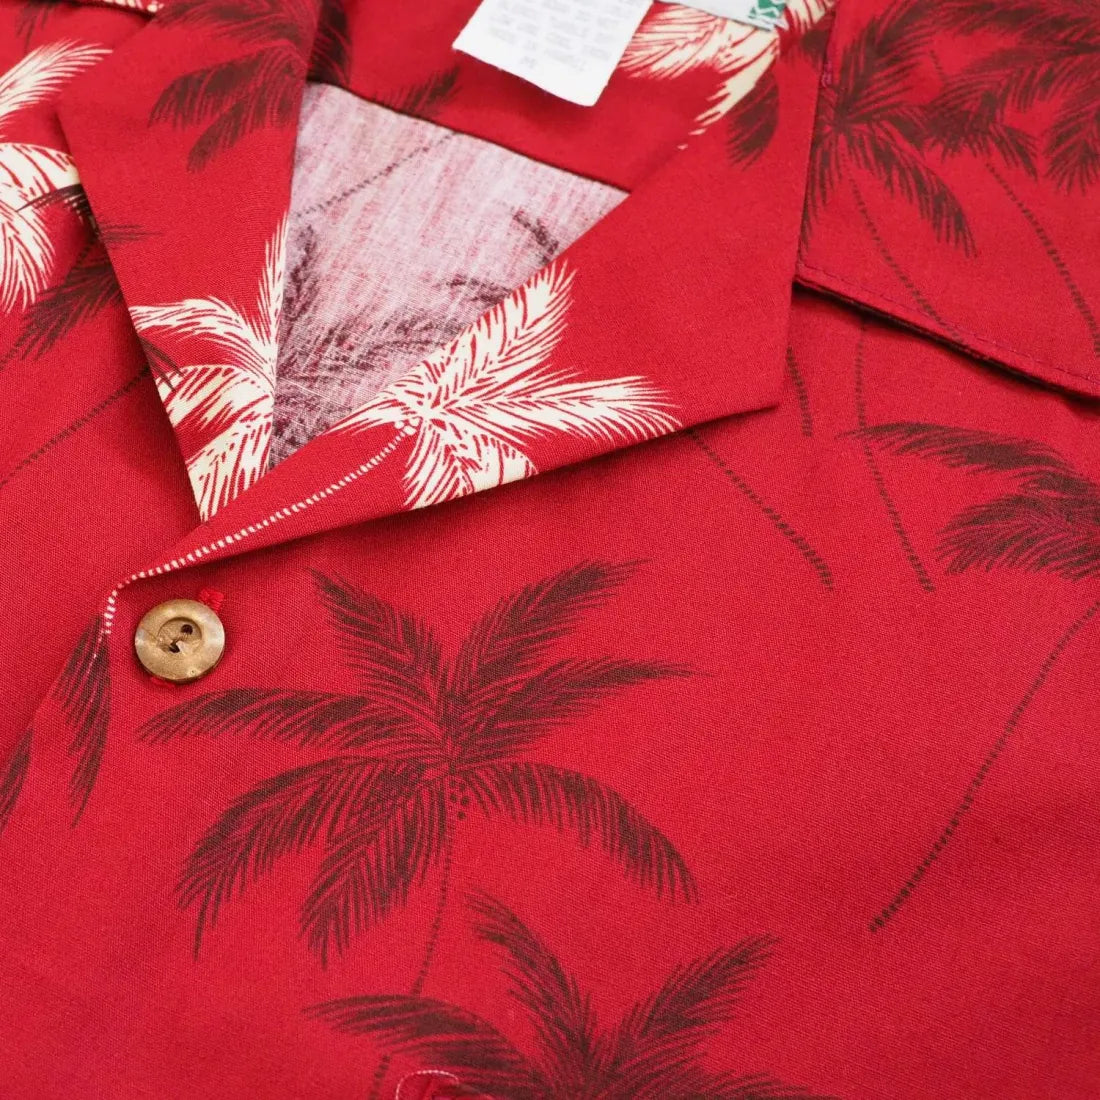 Palm Beach Red Hawaiian Cotton Shirt - Made In Hawaii